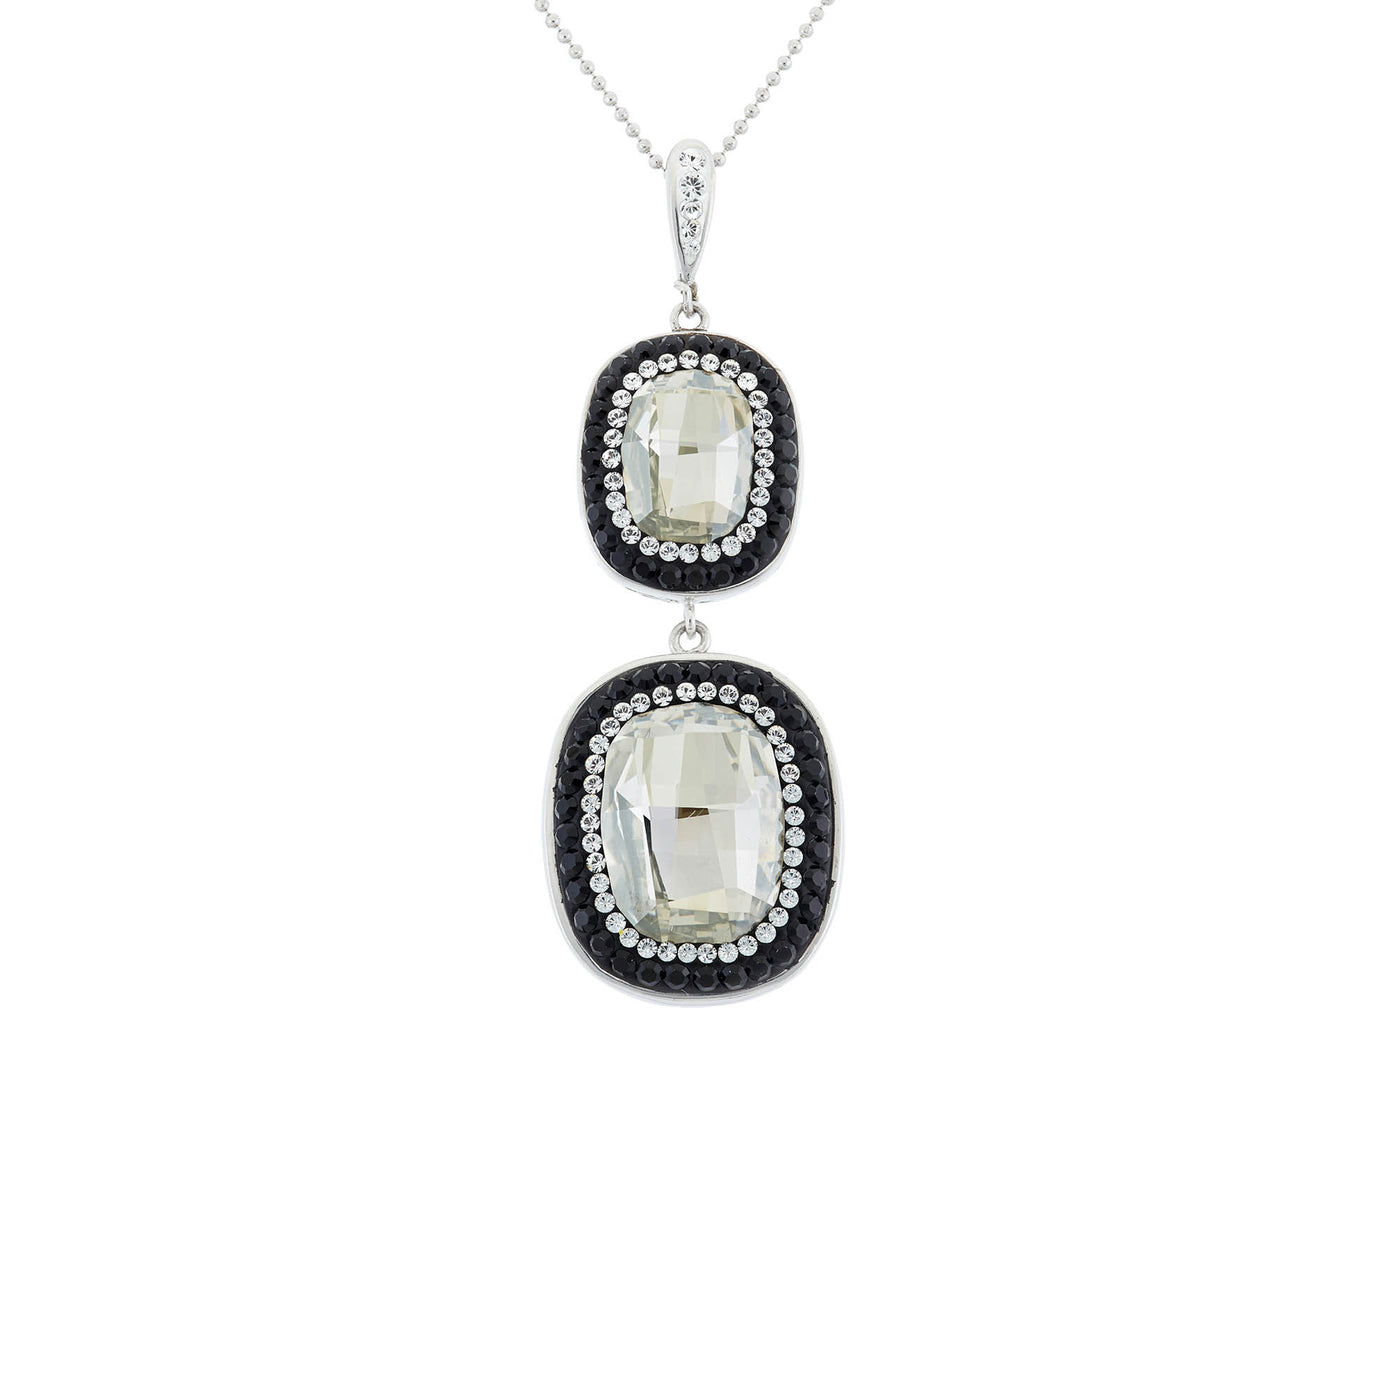 Rebecca Sloane Silver Multi Round Crystal With Black Pave Pendant